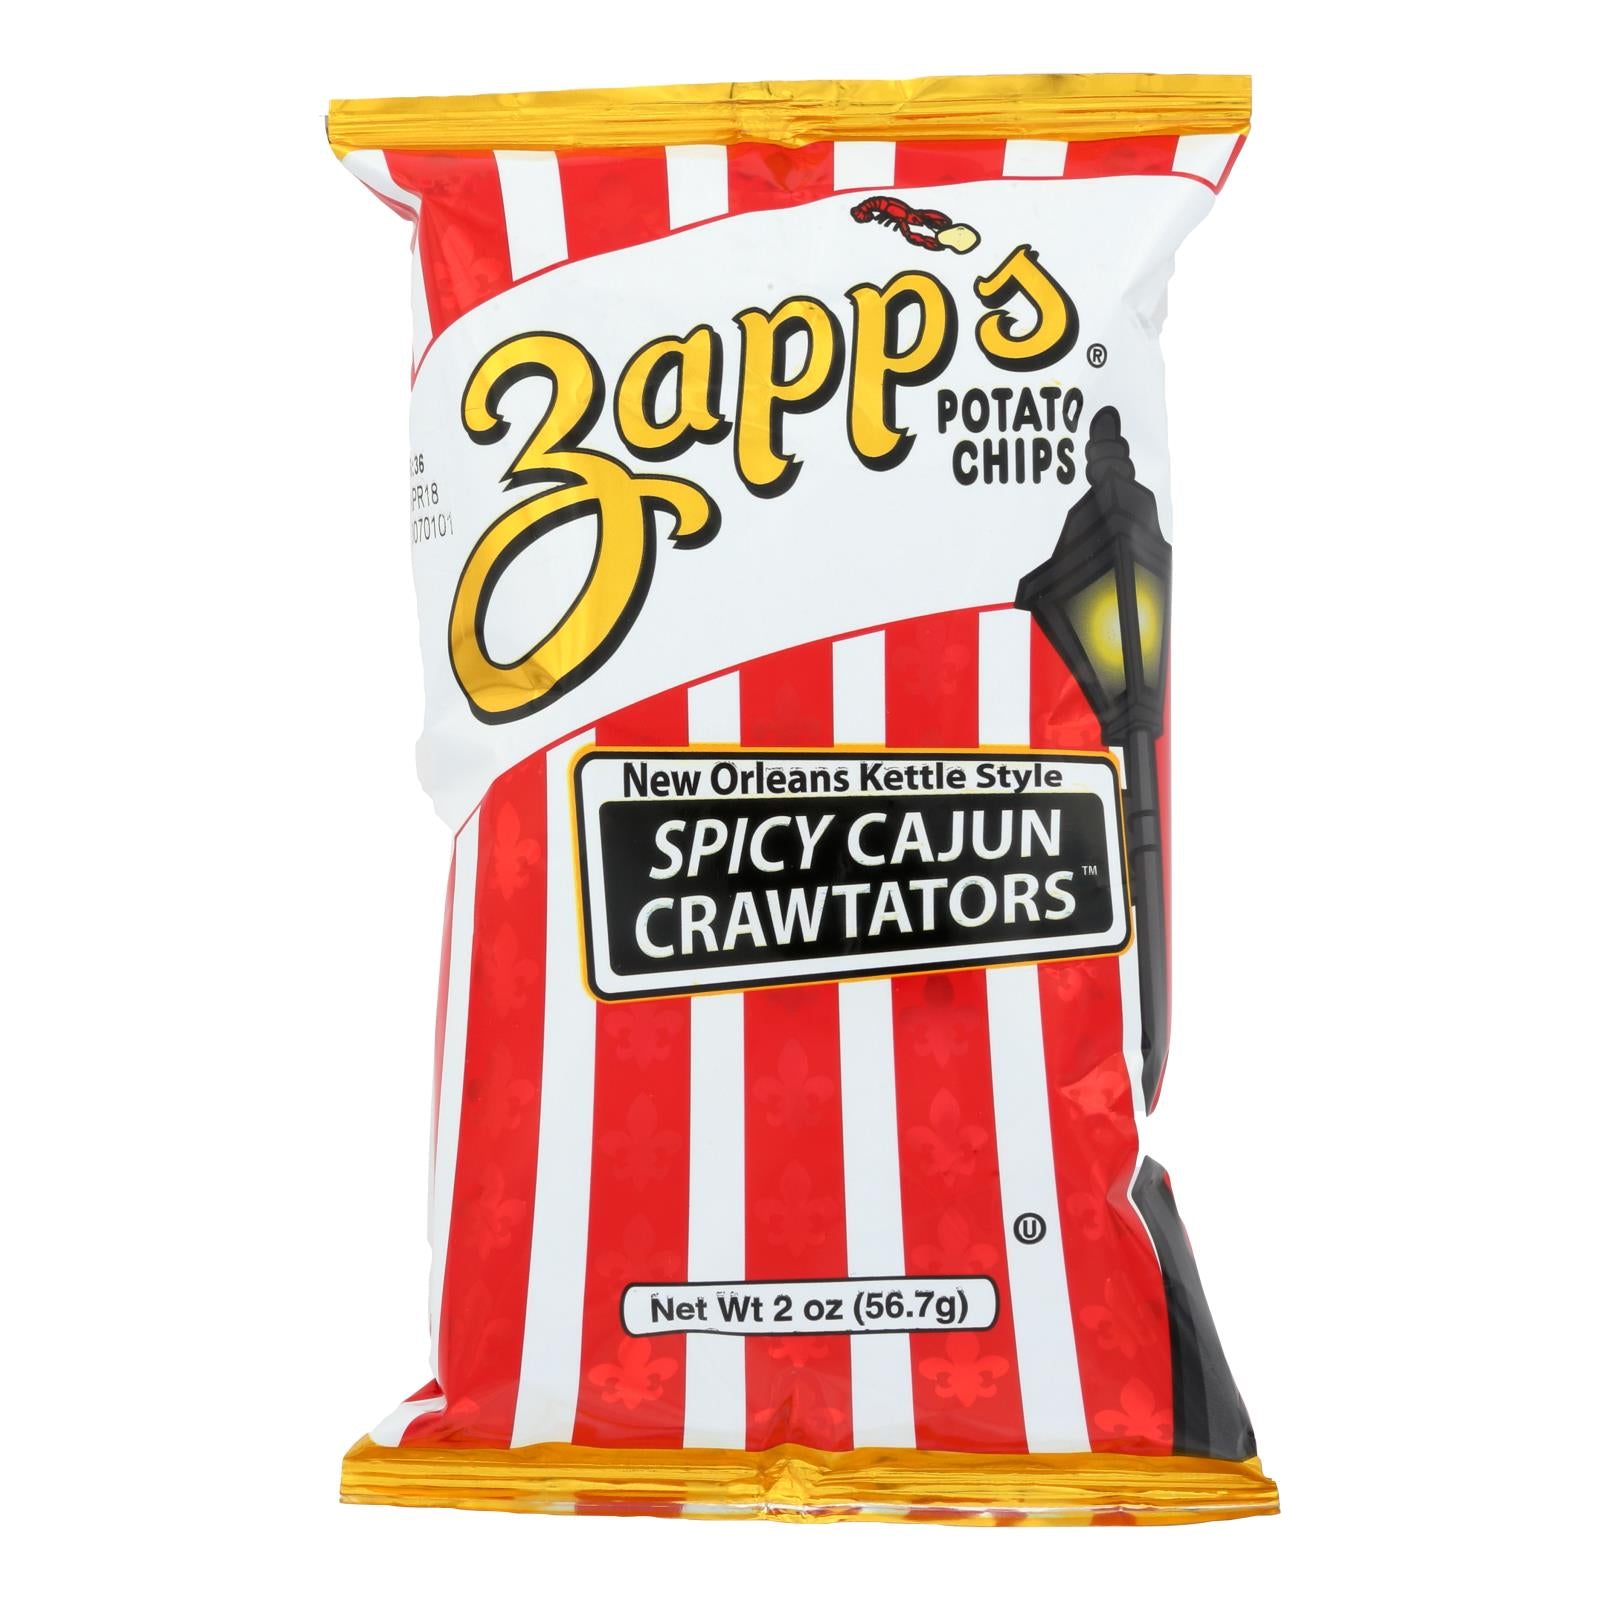 Zapps Potato Chips Chips - Cajun Crawtator - 2o - Case Of 25 - 2 Oz